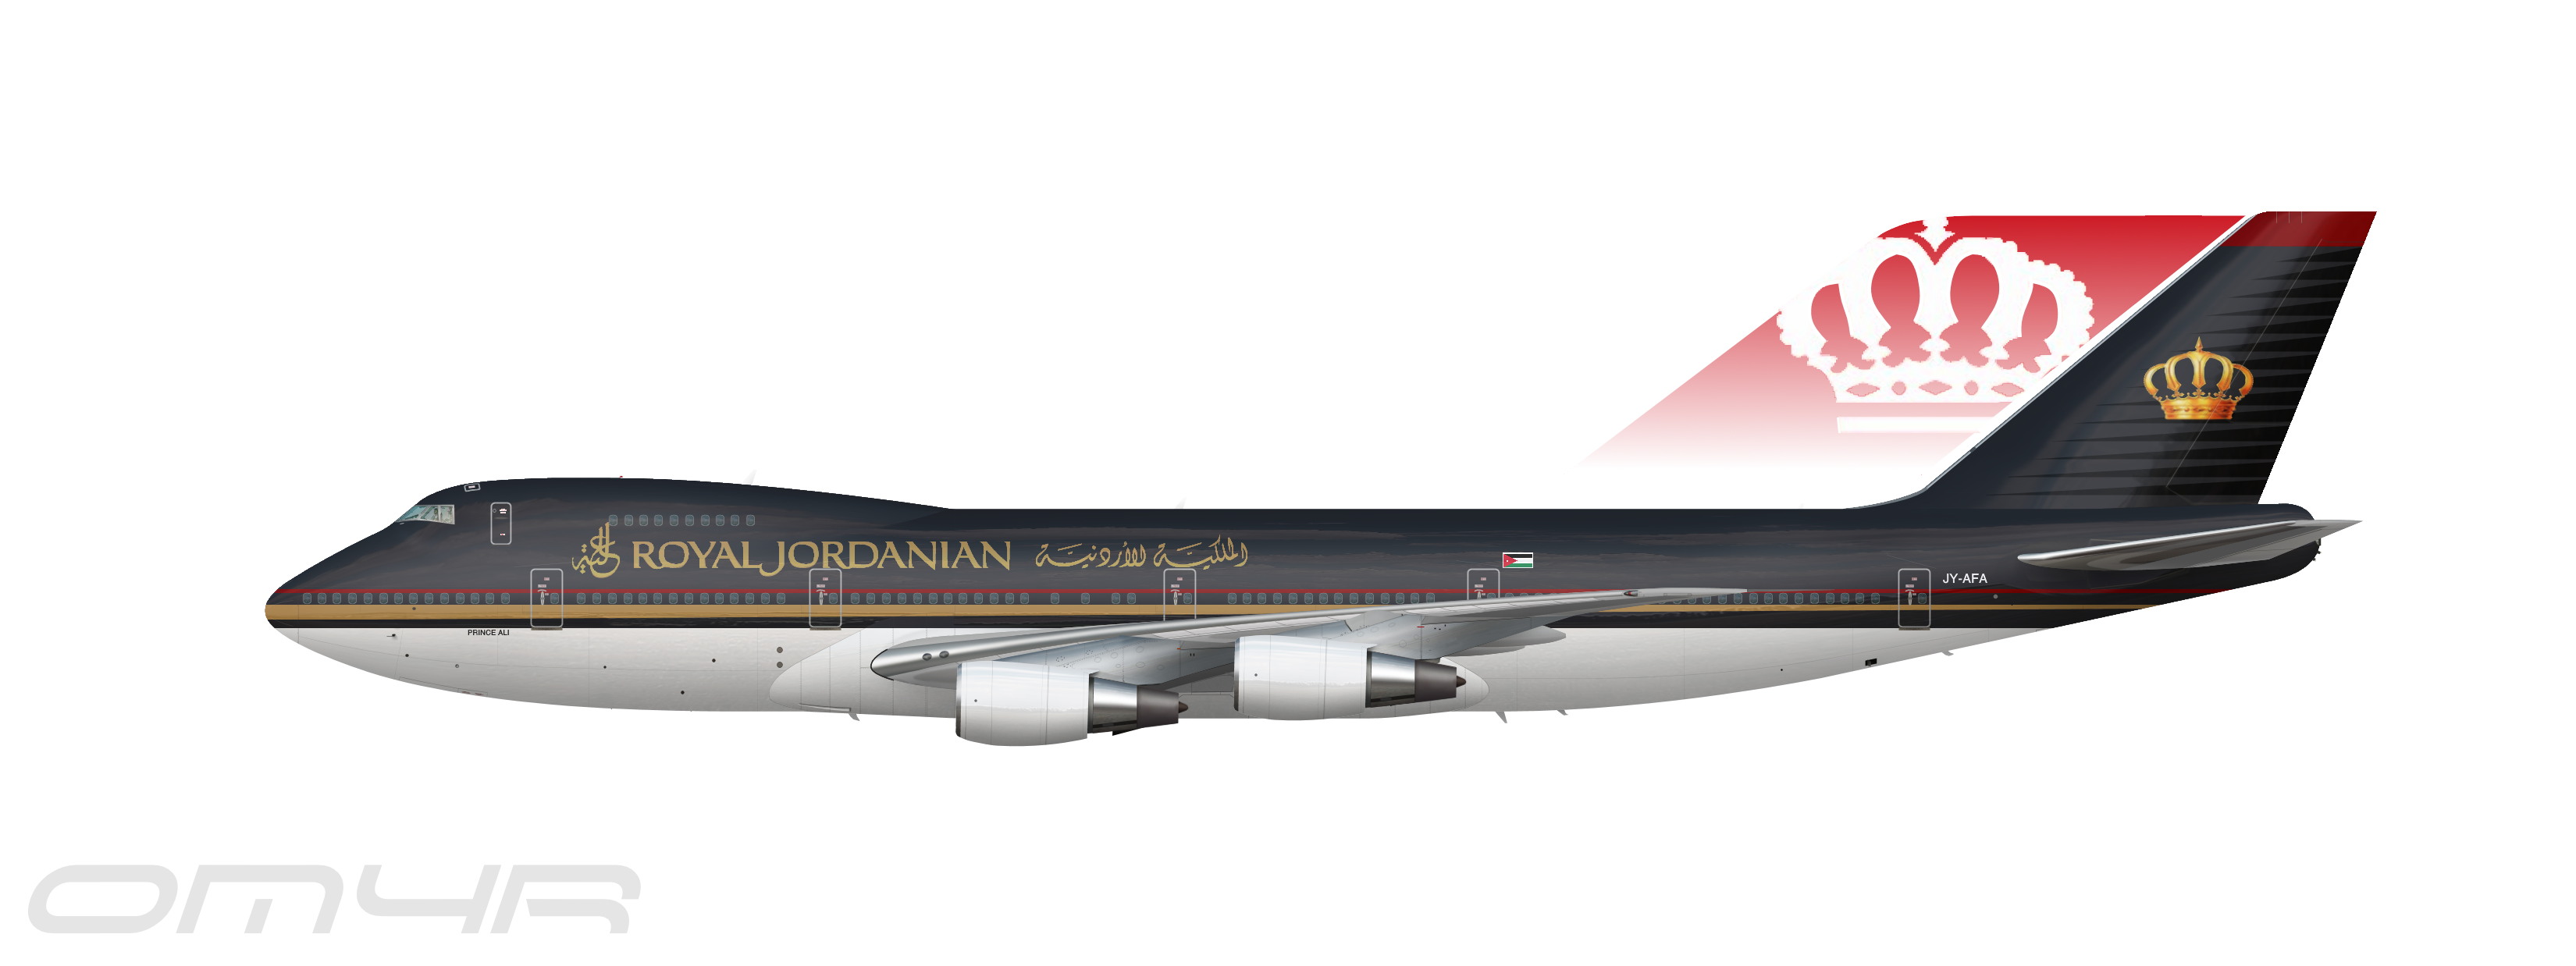 royal jordanian 747